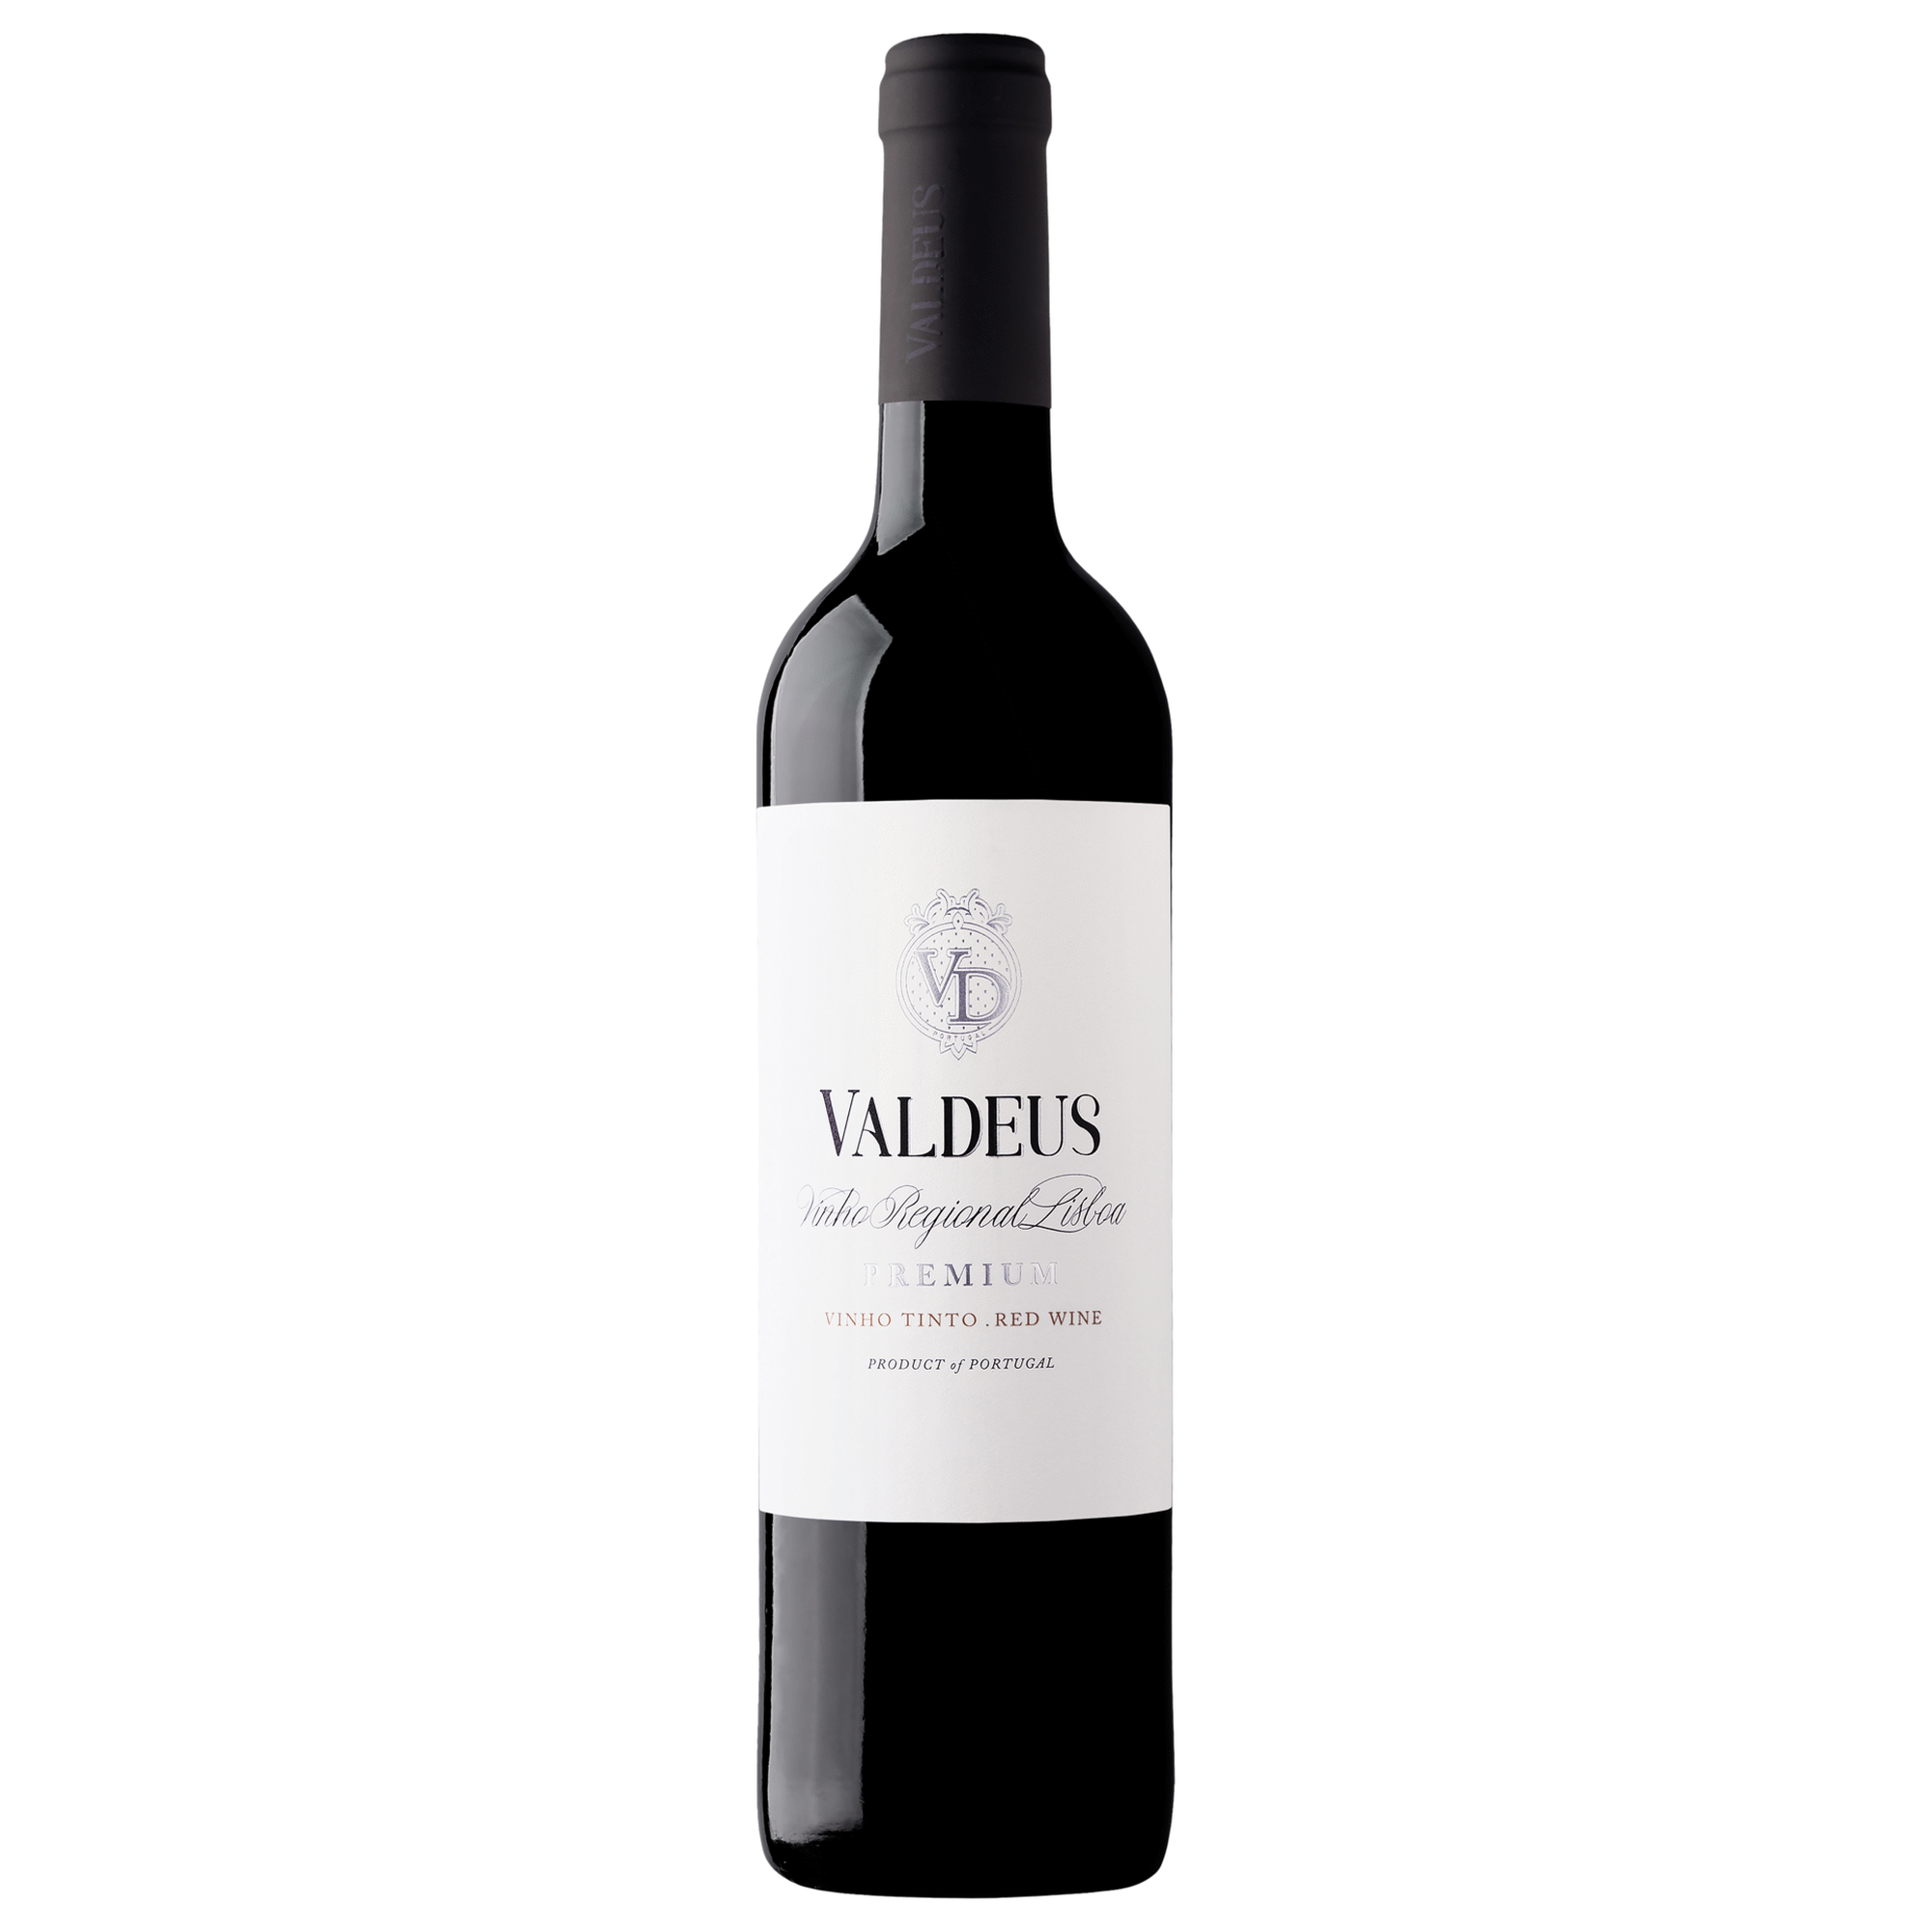 Valdeus Premium Regional Lisboa Vinho Tinto